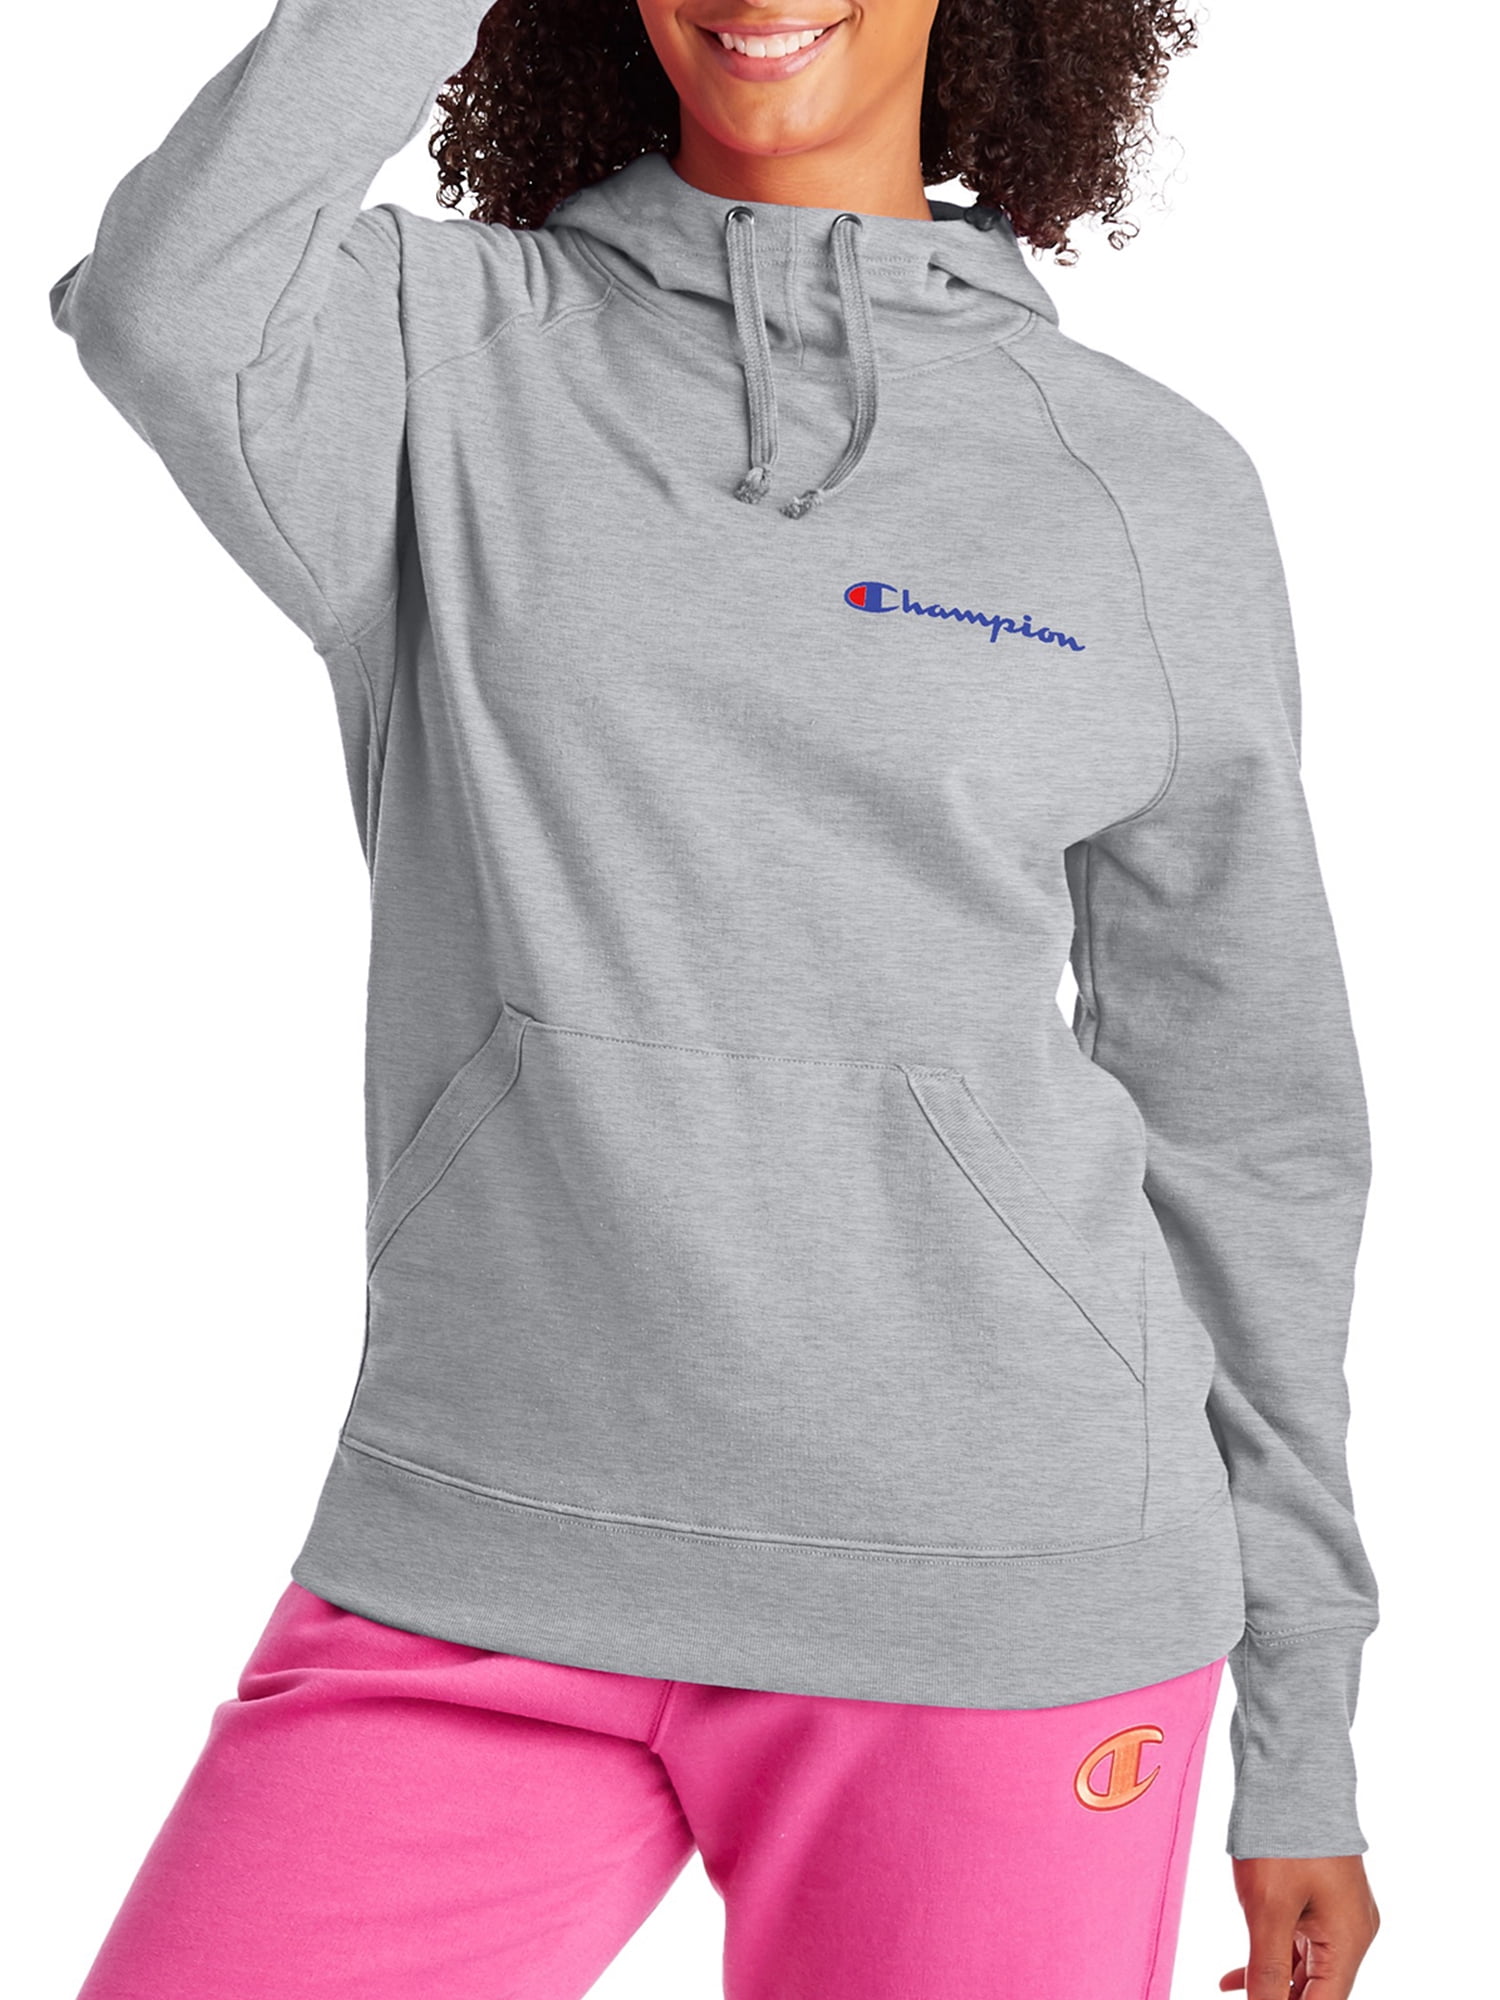 Champion Long Sleeve Hoodie (Women's) - Walmart.com